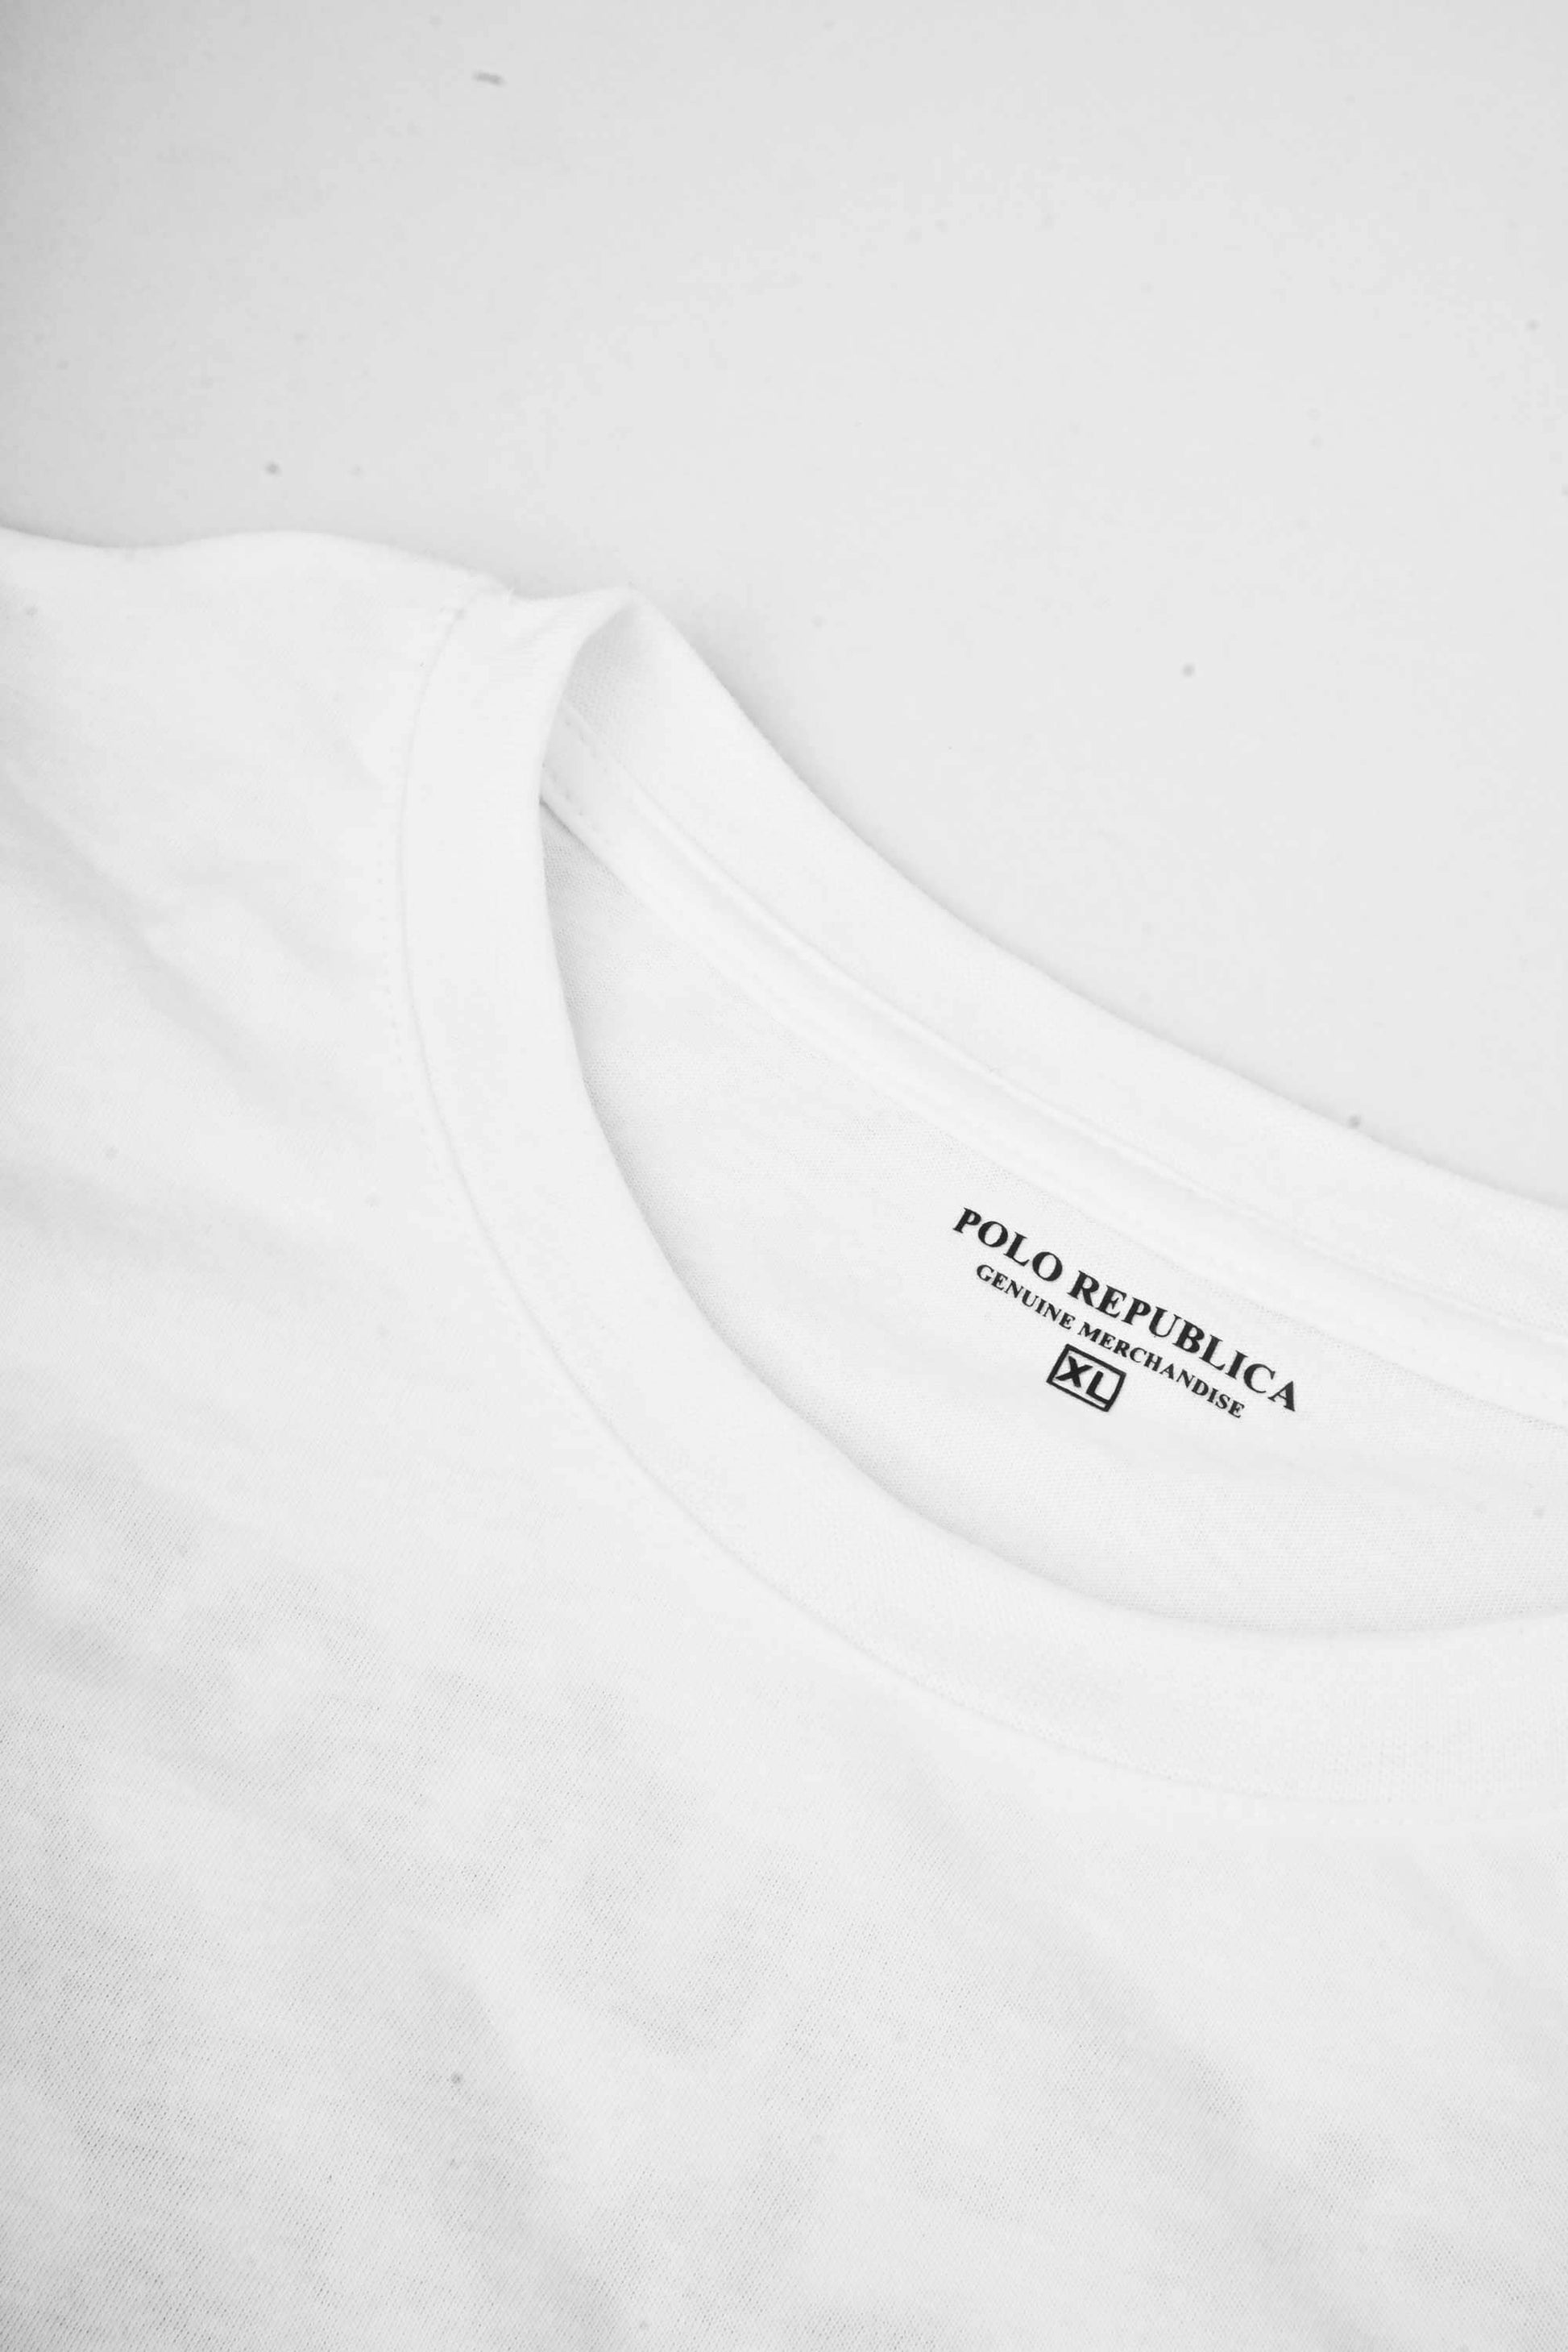 Polo Republica Men's PakWheels 2.0D Corolla Printed Tee Shirt Men's Tee Shirt Polo Republica 